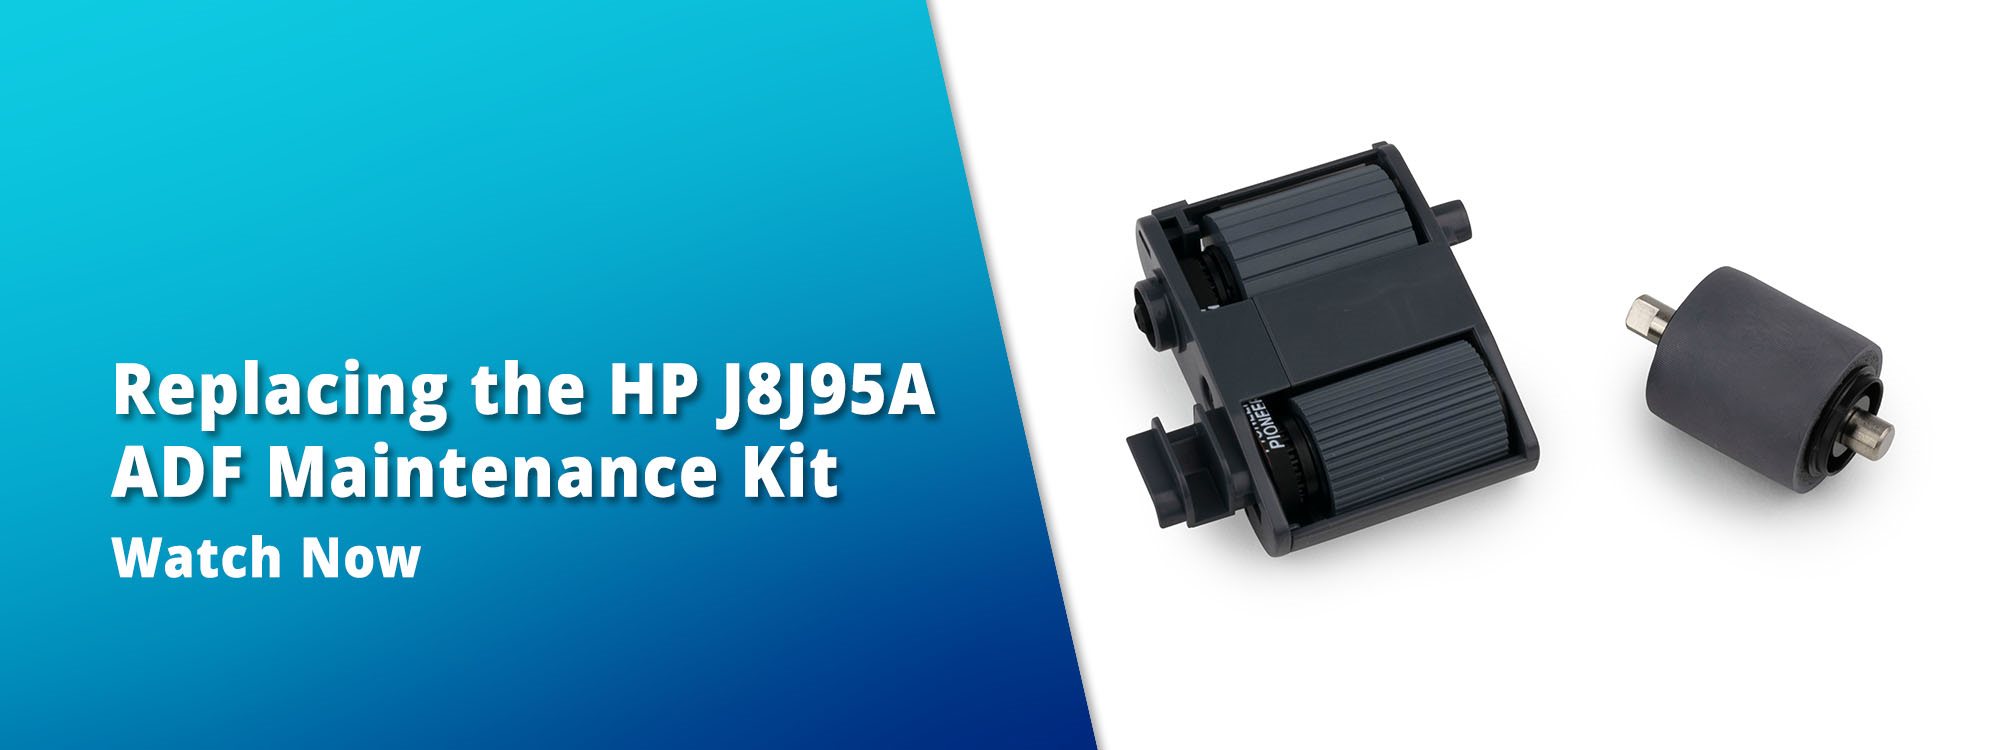 Replacing HP ADF Maintenance Kit J8J95A Video